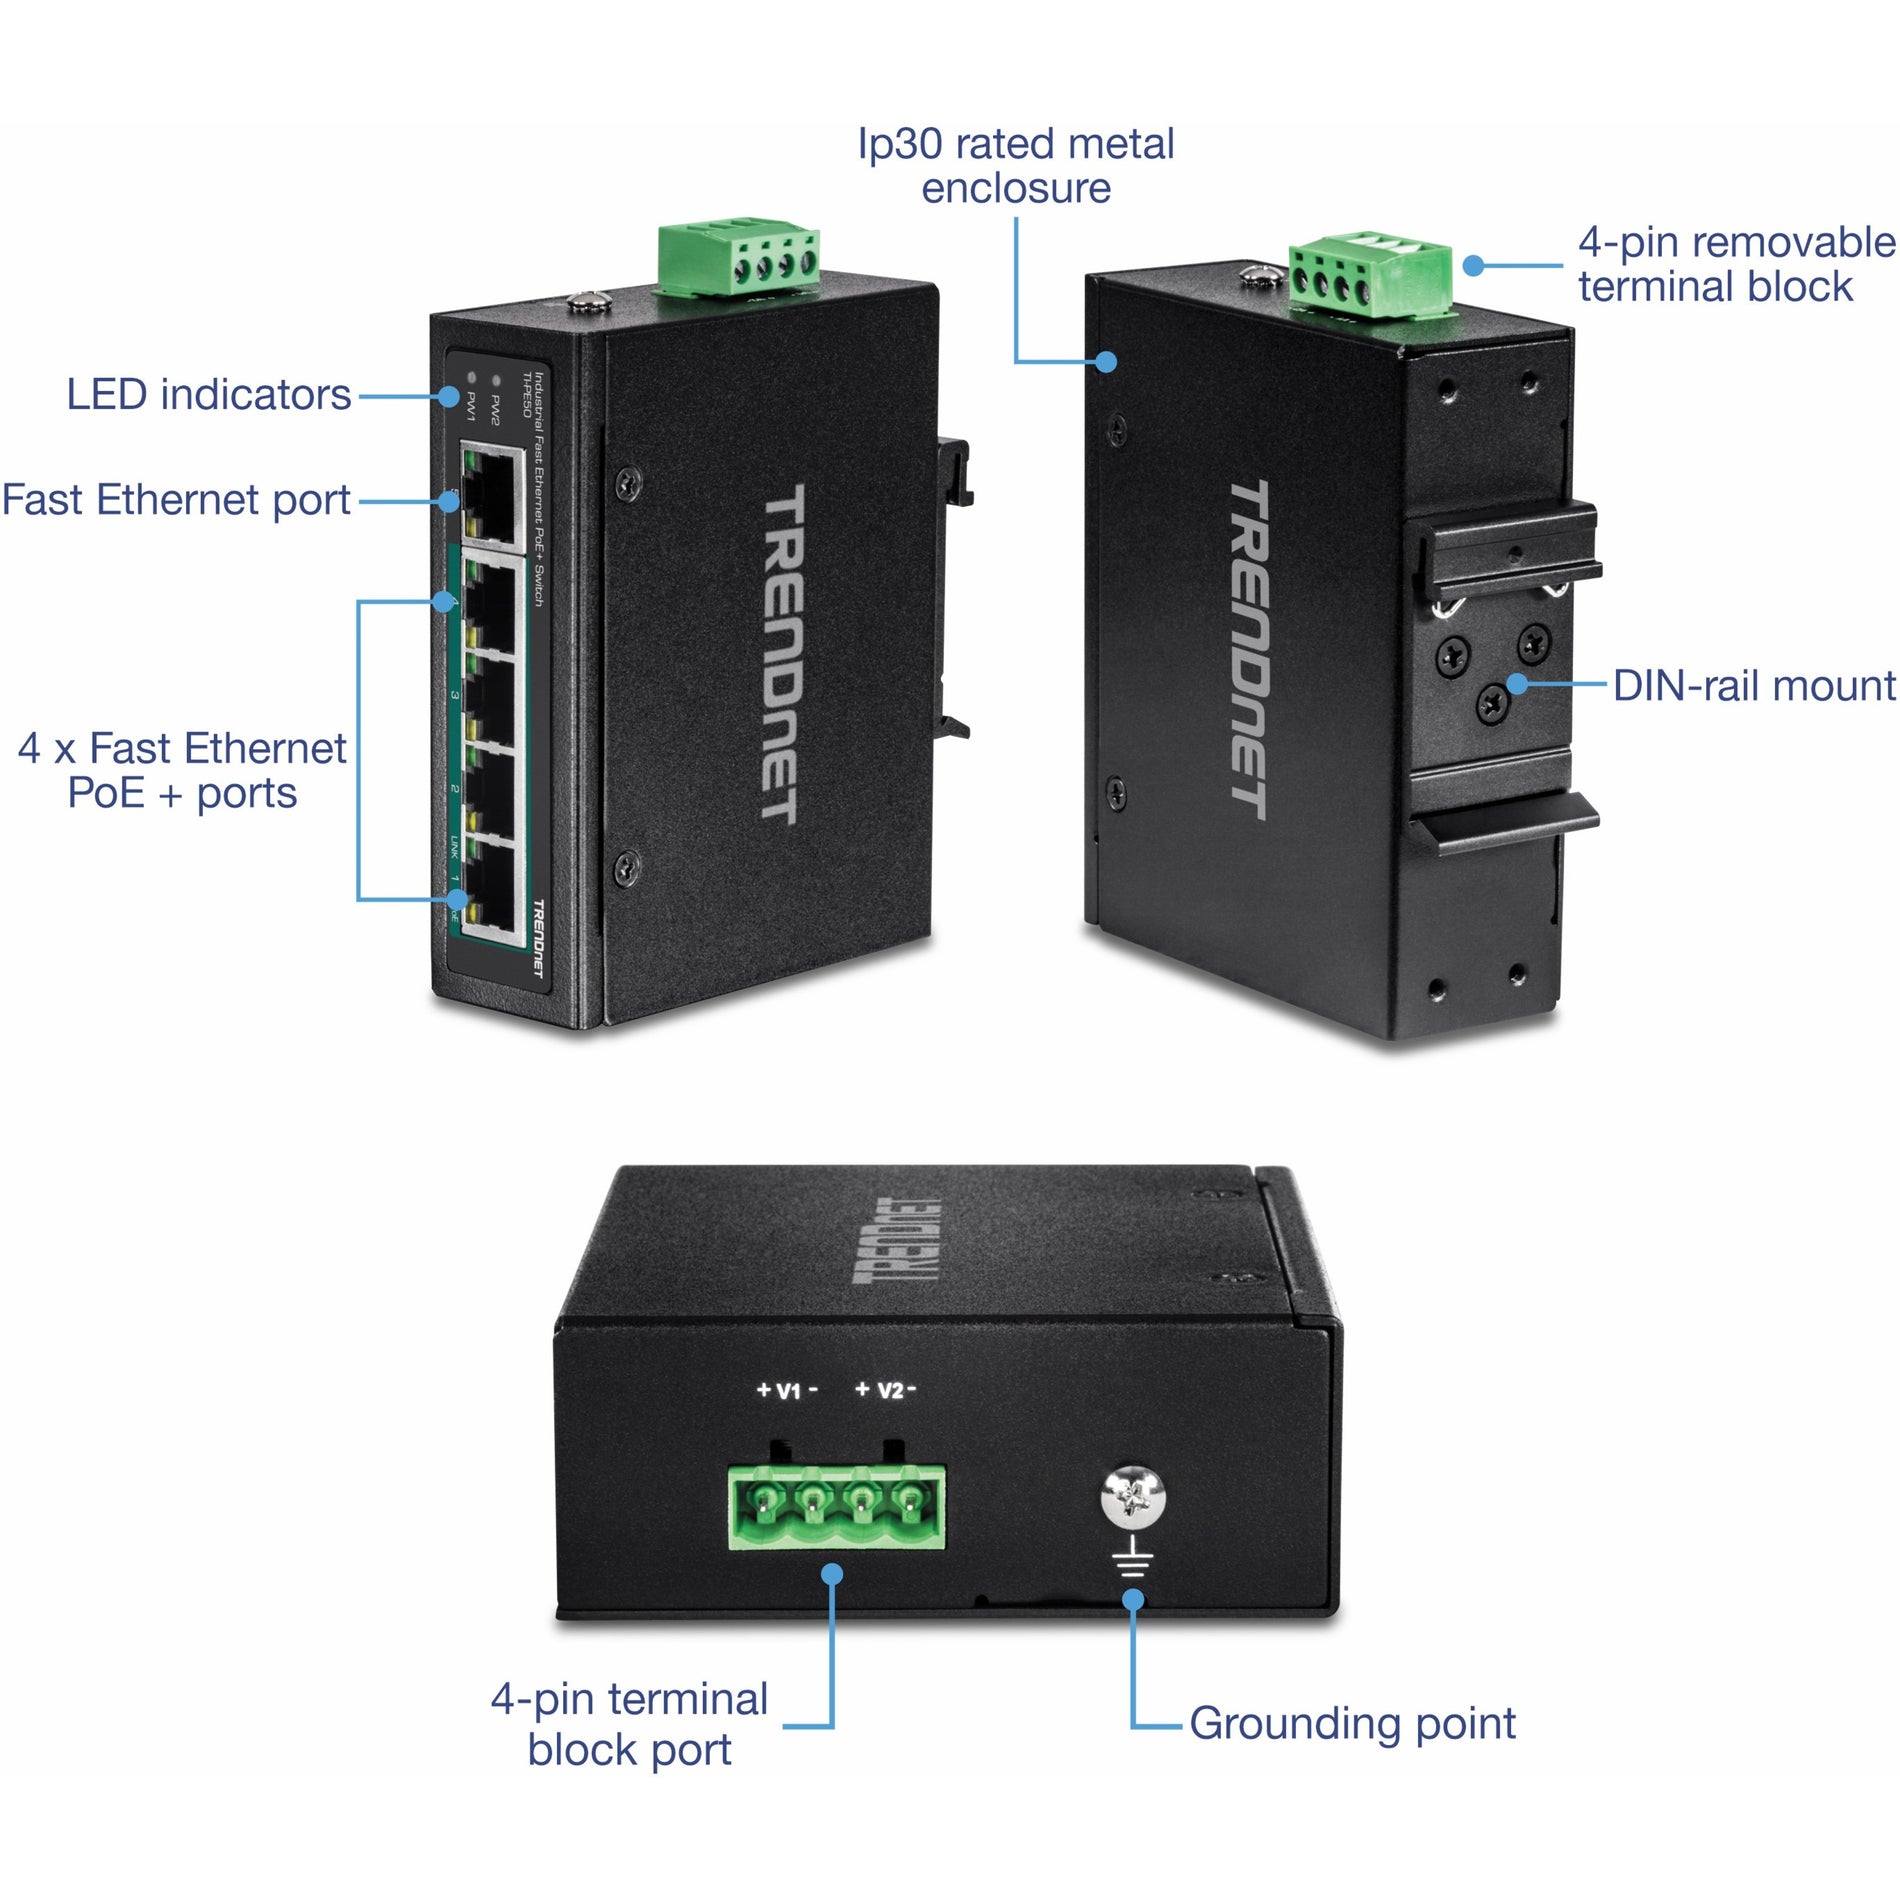 TRENDnet TI-PE50 5-Port Industrial Fast Ethernet PoE+ DIN-Rail Switch, 4 x Fast Ethernet PoE+ Ports, 1 x Fast Ethernet Port, 90W PoE Power Budget, DIN-Rail, IP30 Rated, Lifetime Protection, Black